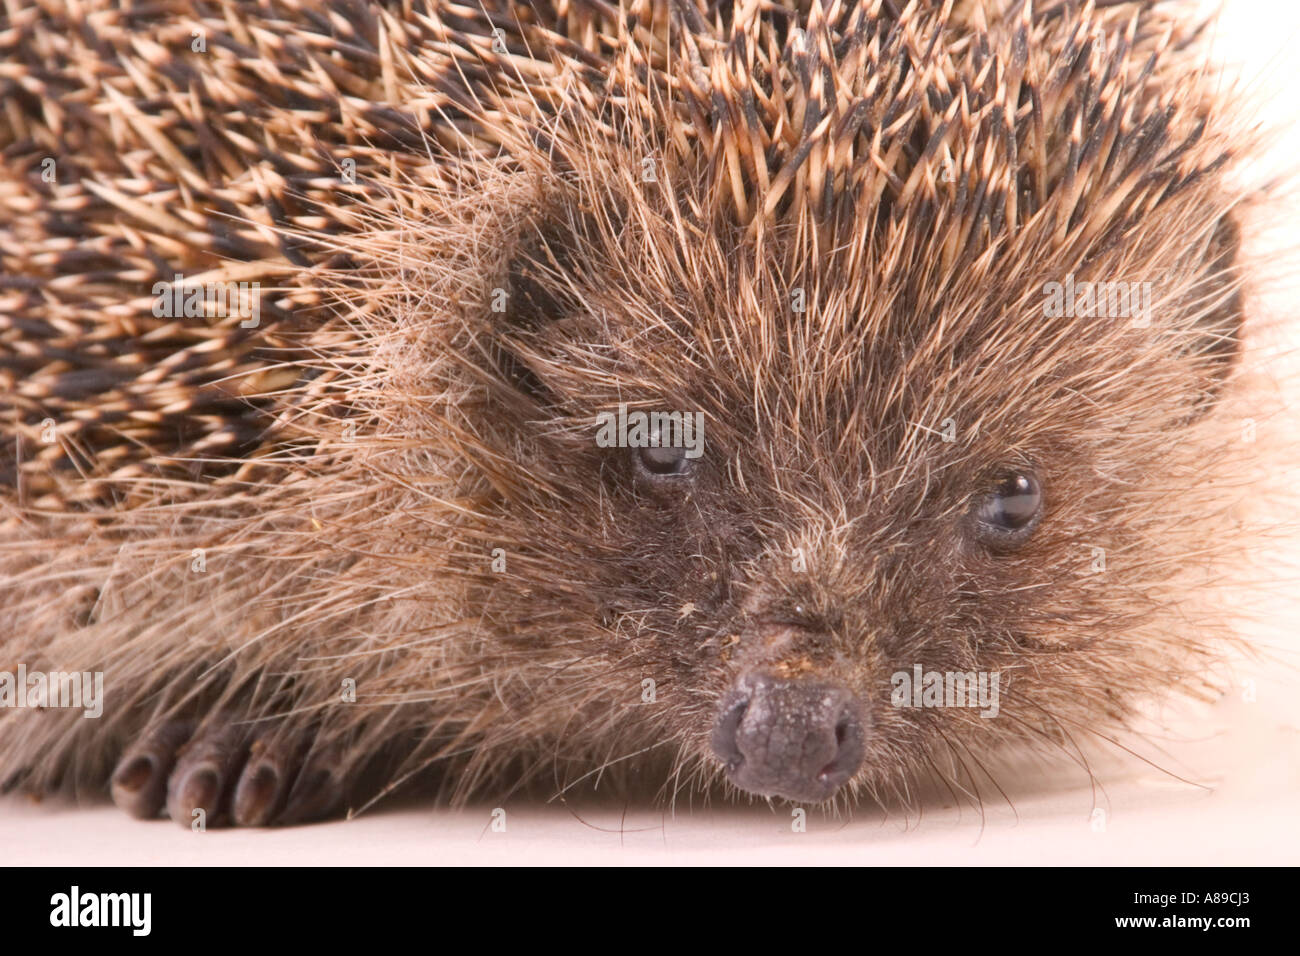 Hedgehog (Erinaceus europaeus) Stock Photo